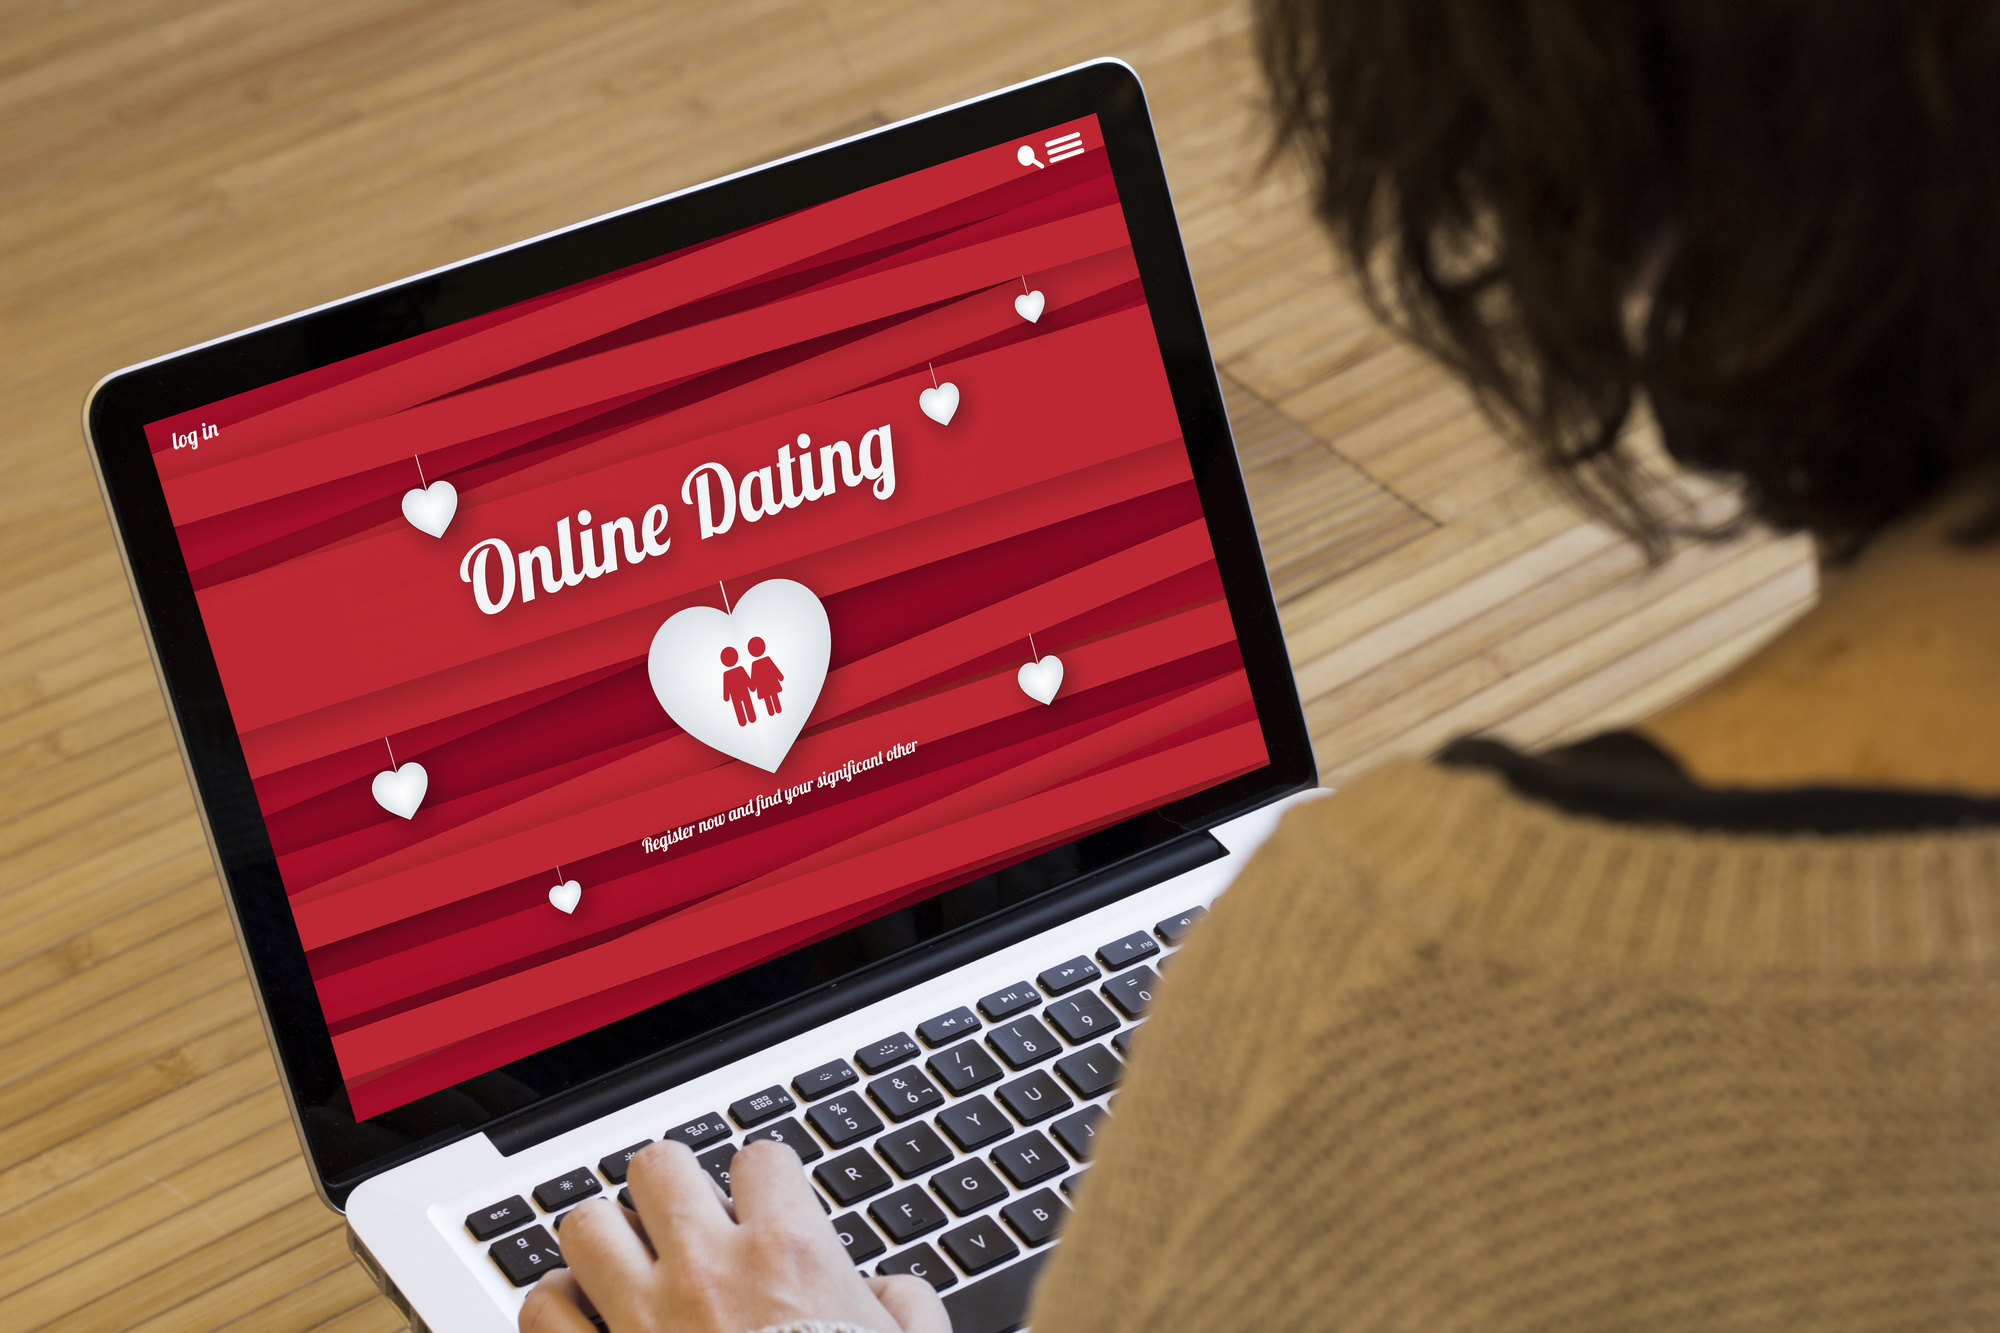 Online dating expert adult app free download thenavyandhraschool